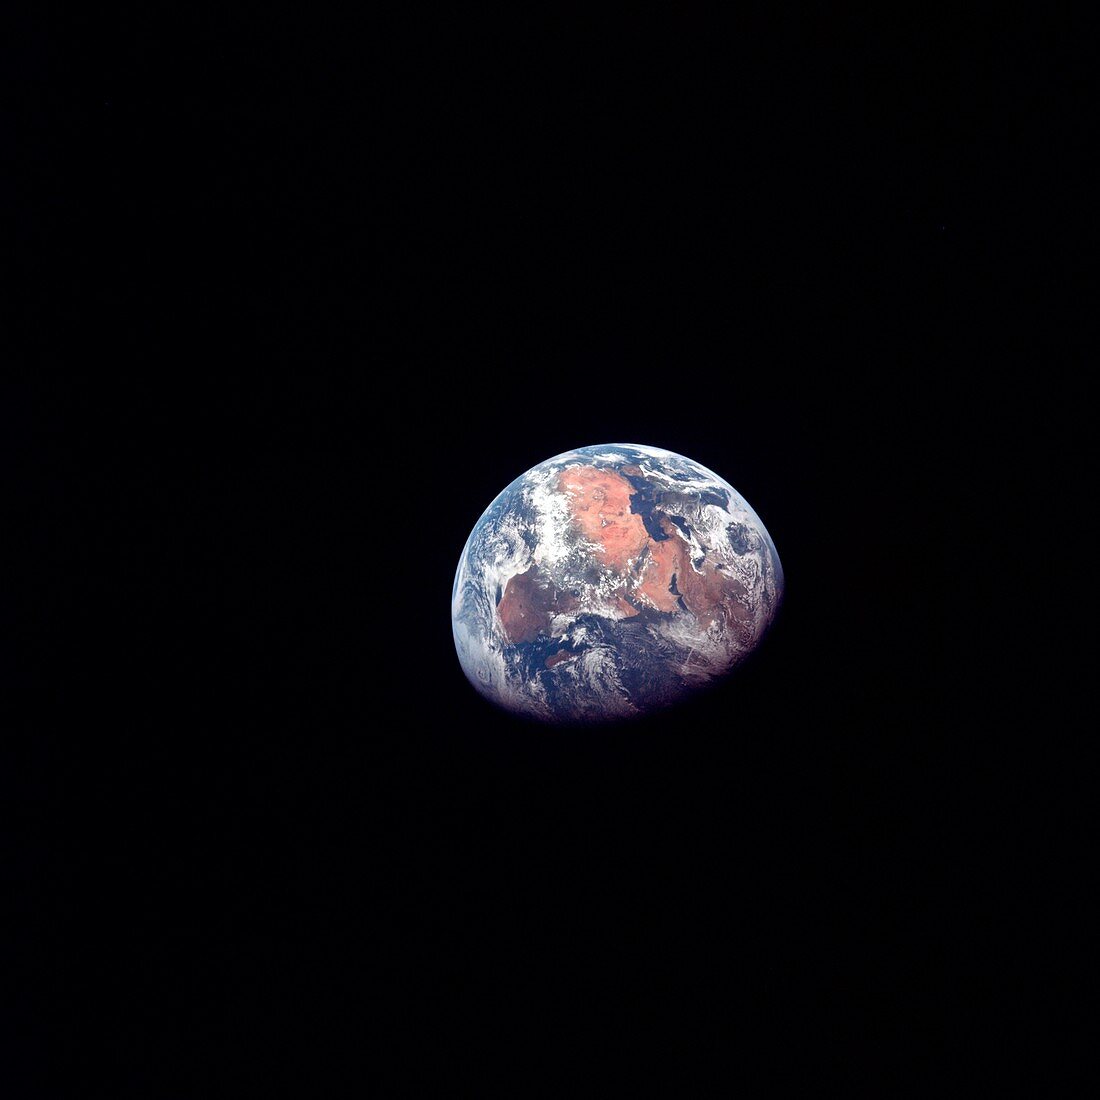 Apollo 11 photo of Earth